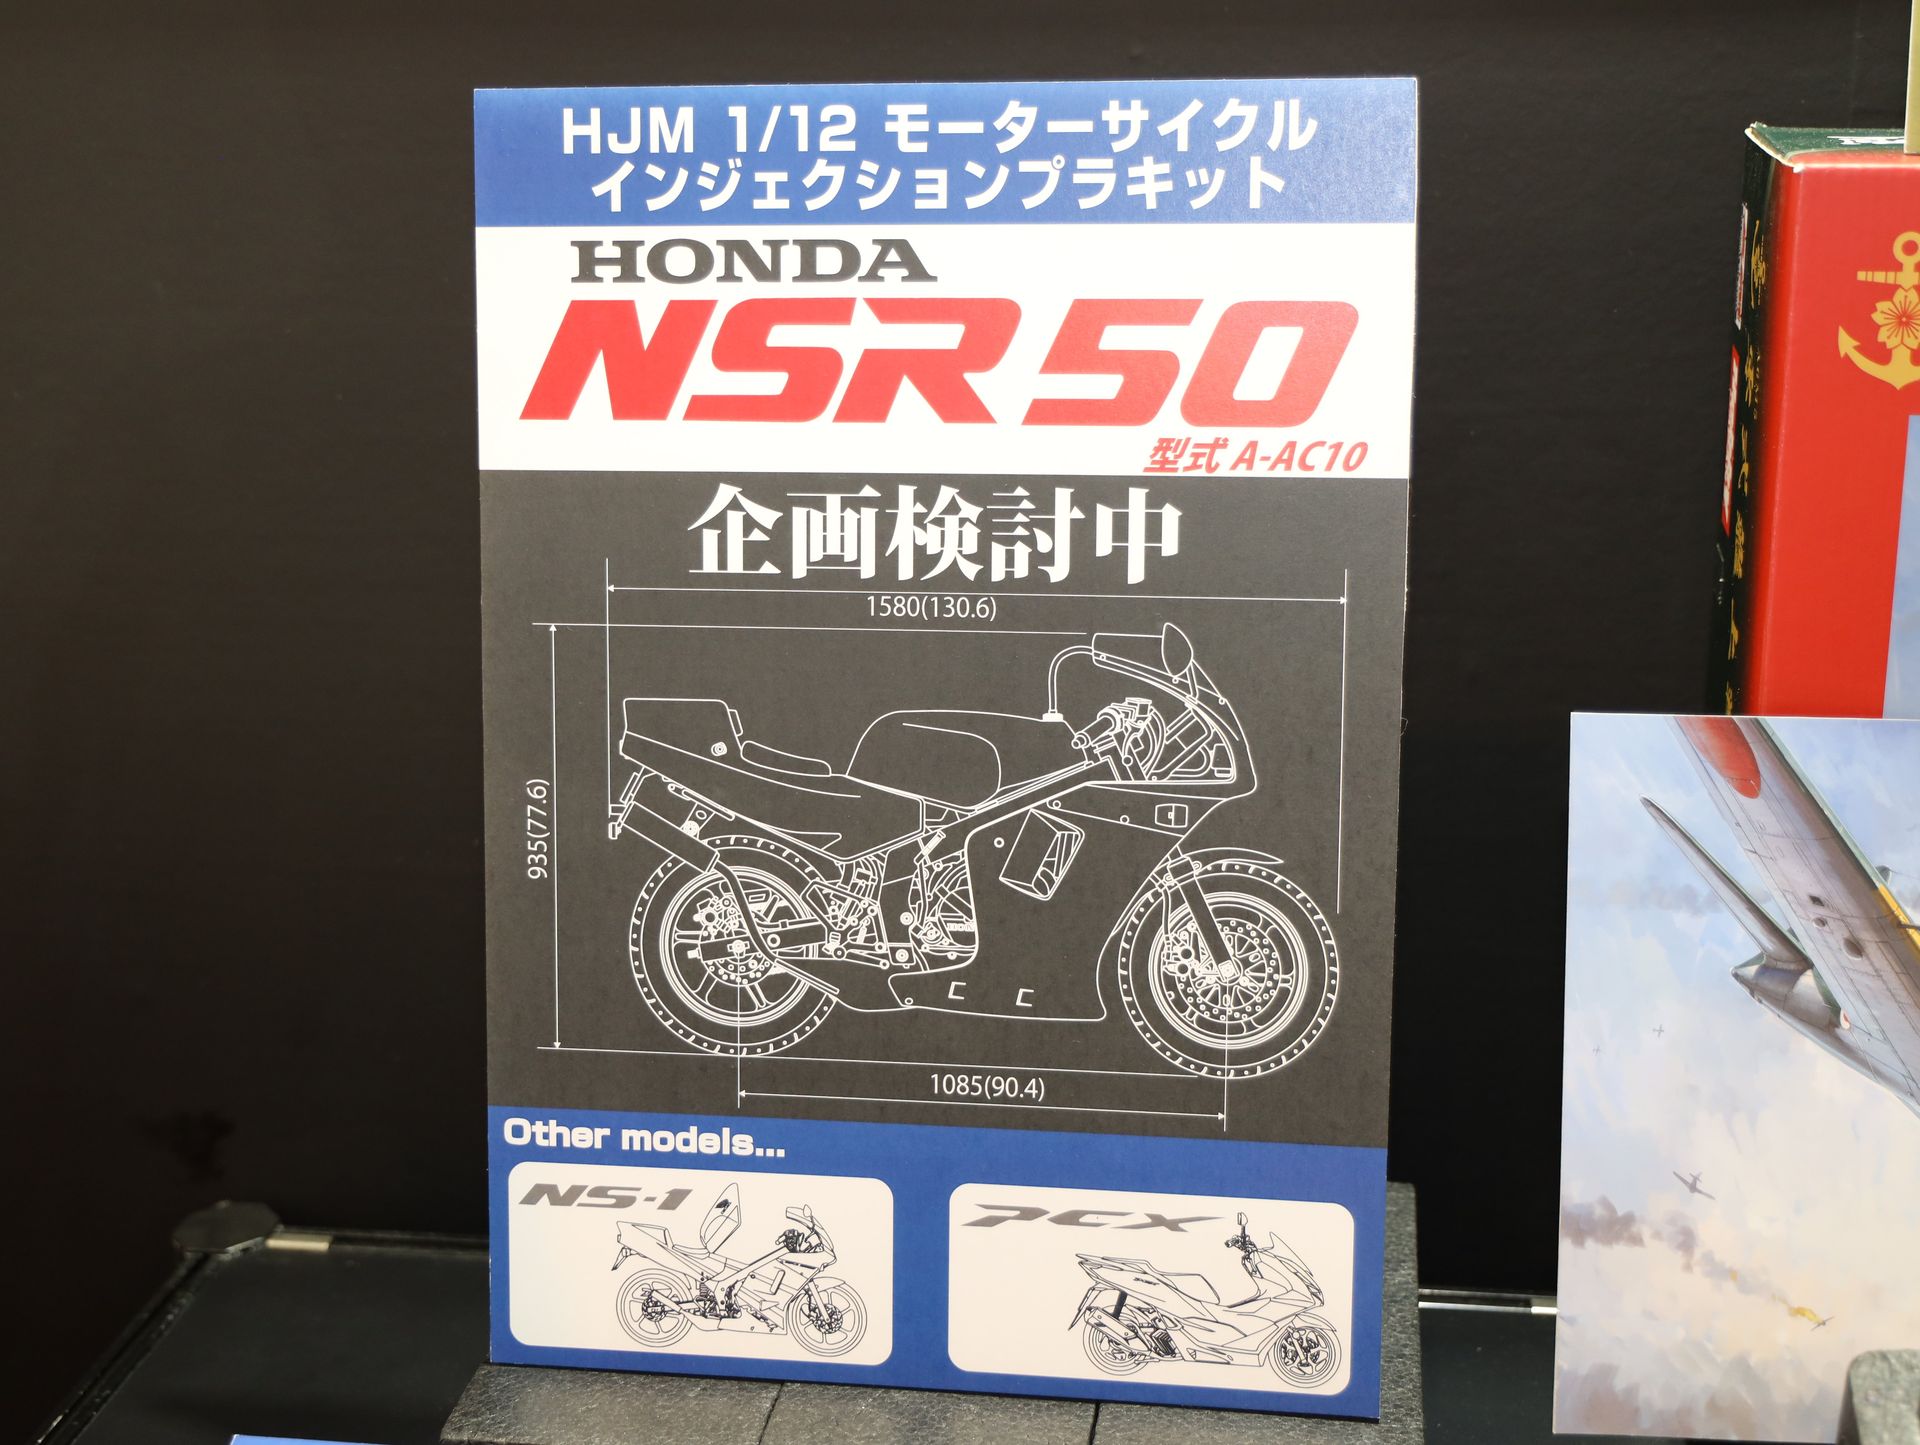 50ccバイク廃止の時代にあえて「HONDA NSR50」をキット化するホビージャパンを応援したい【#静岡ホビーショー】 - HOBBY Watch